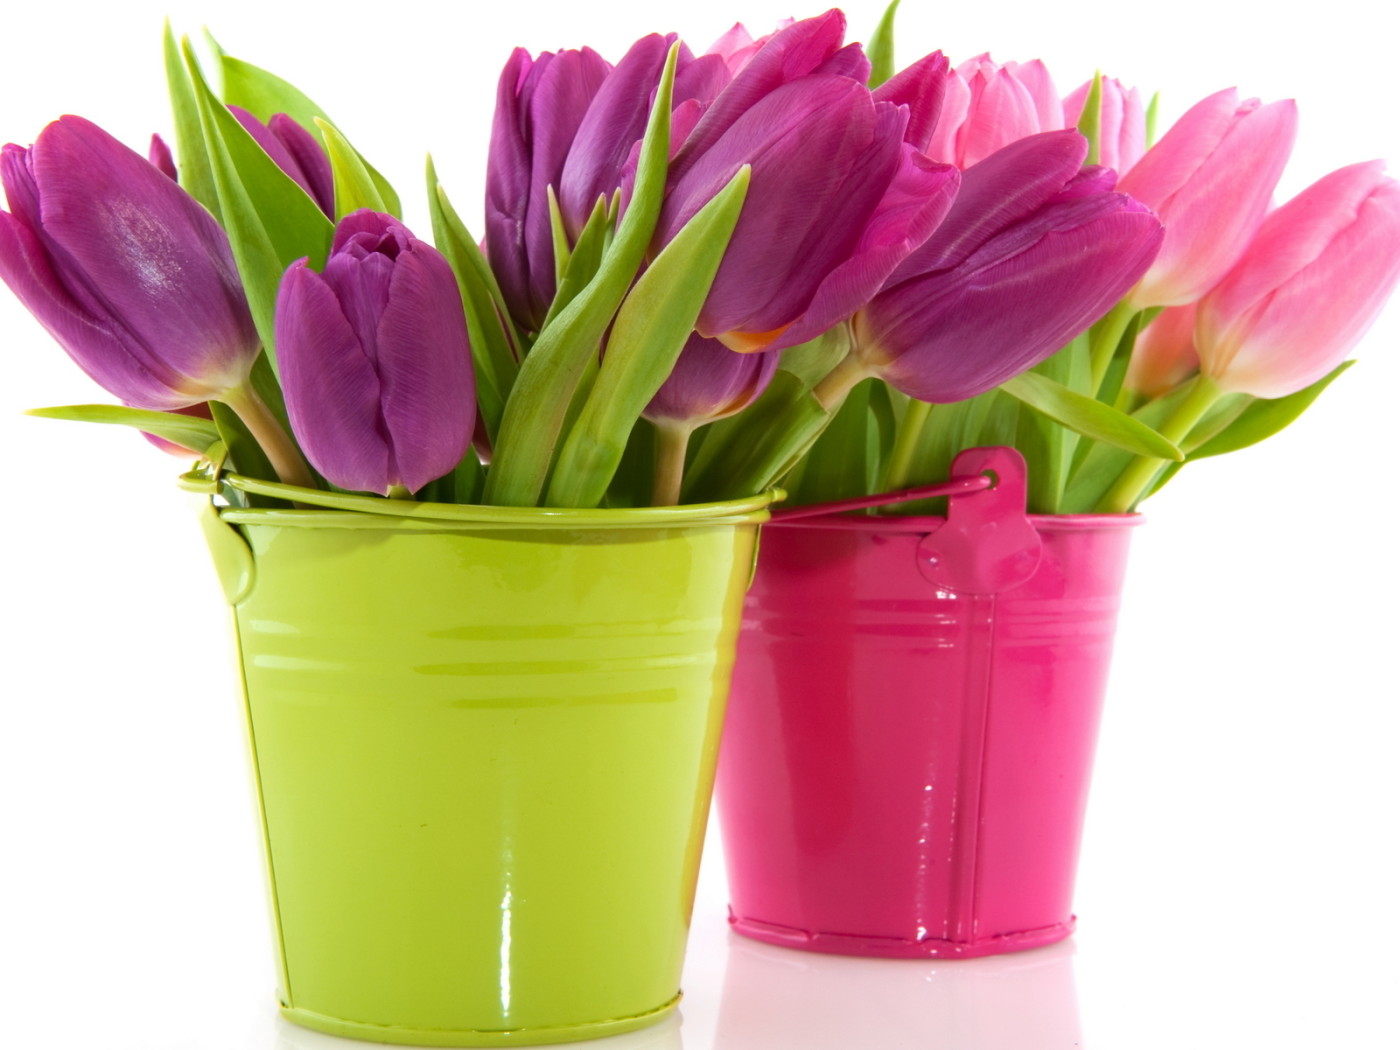 Tulips in the bucket